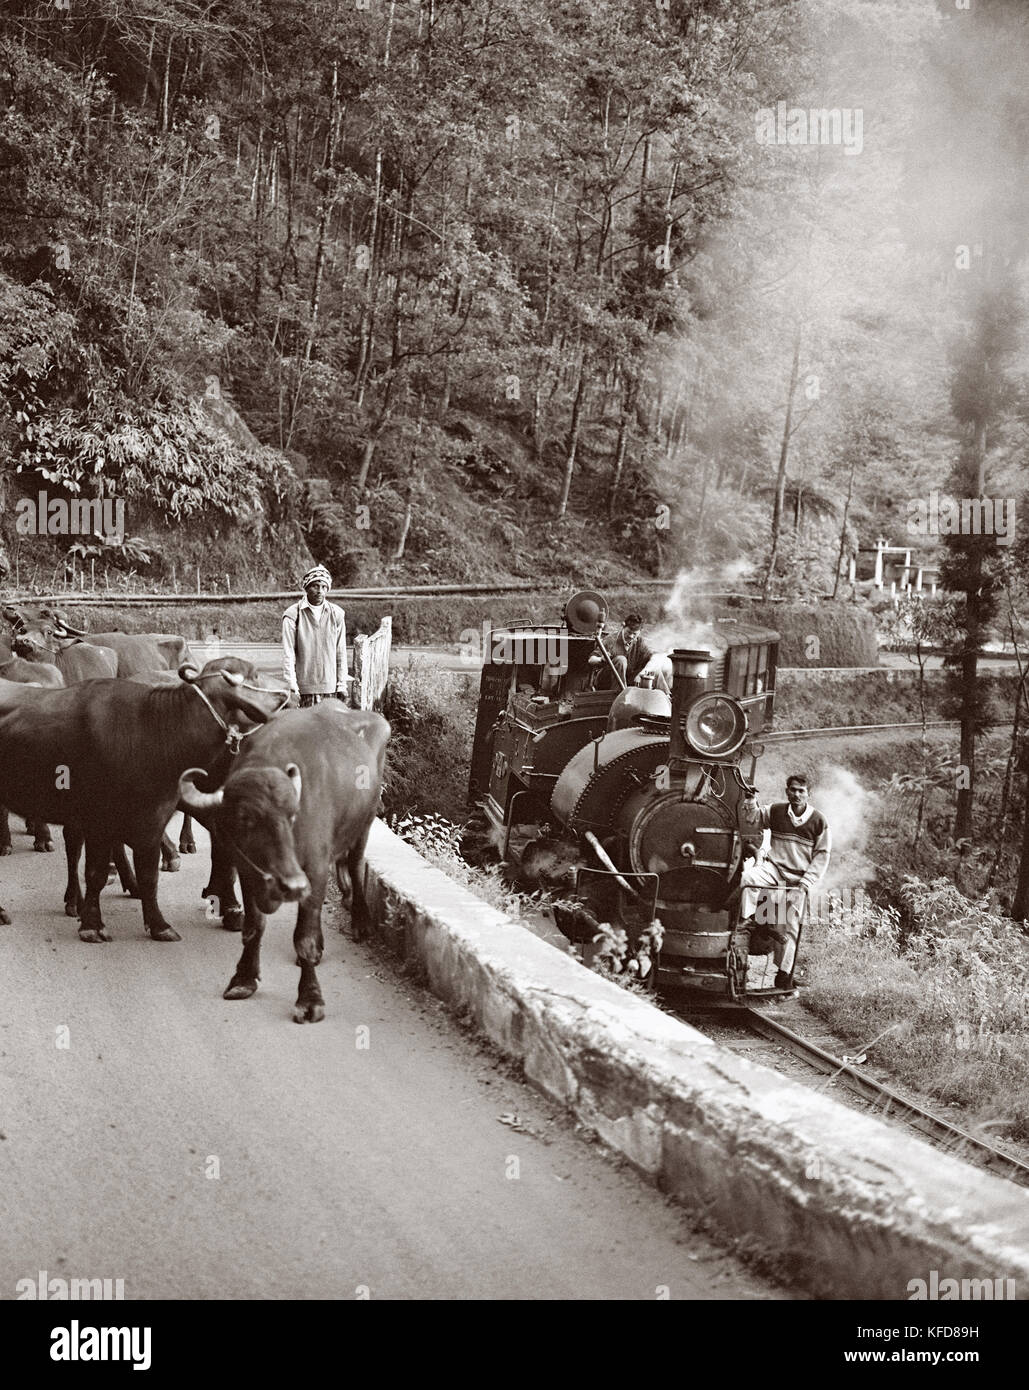 India, West Bengal, farmer and water buffalo next to a passing train, Darjeeling Himalayan Railway (B&W) Stock Photo